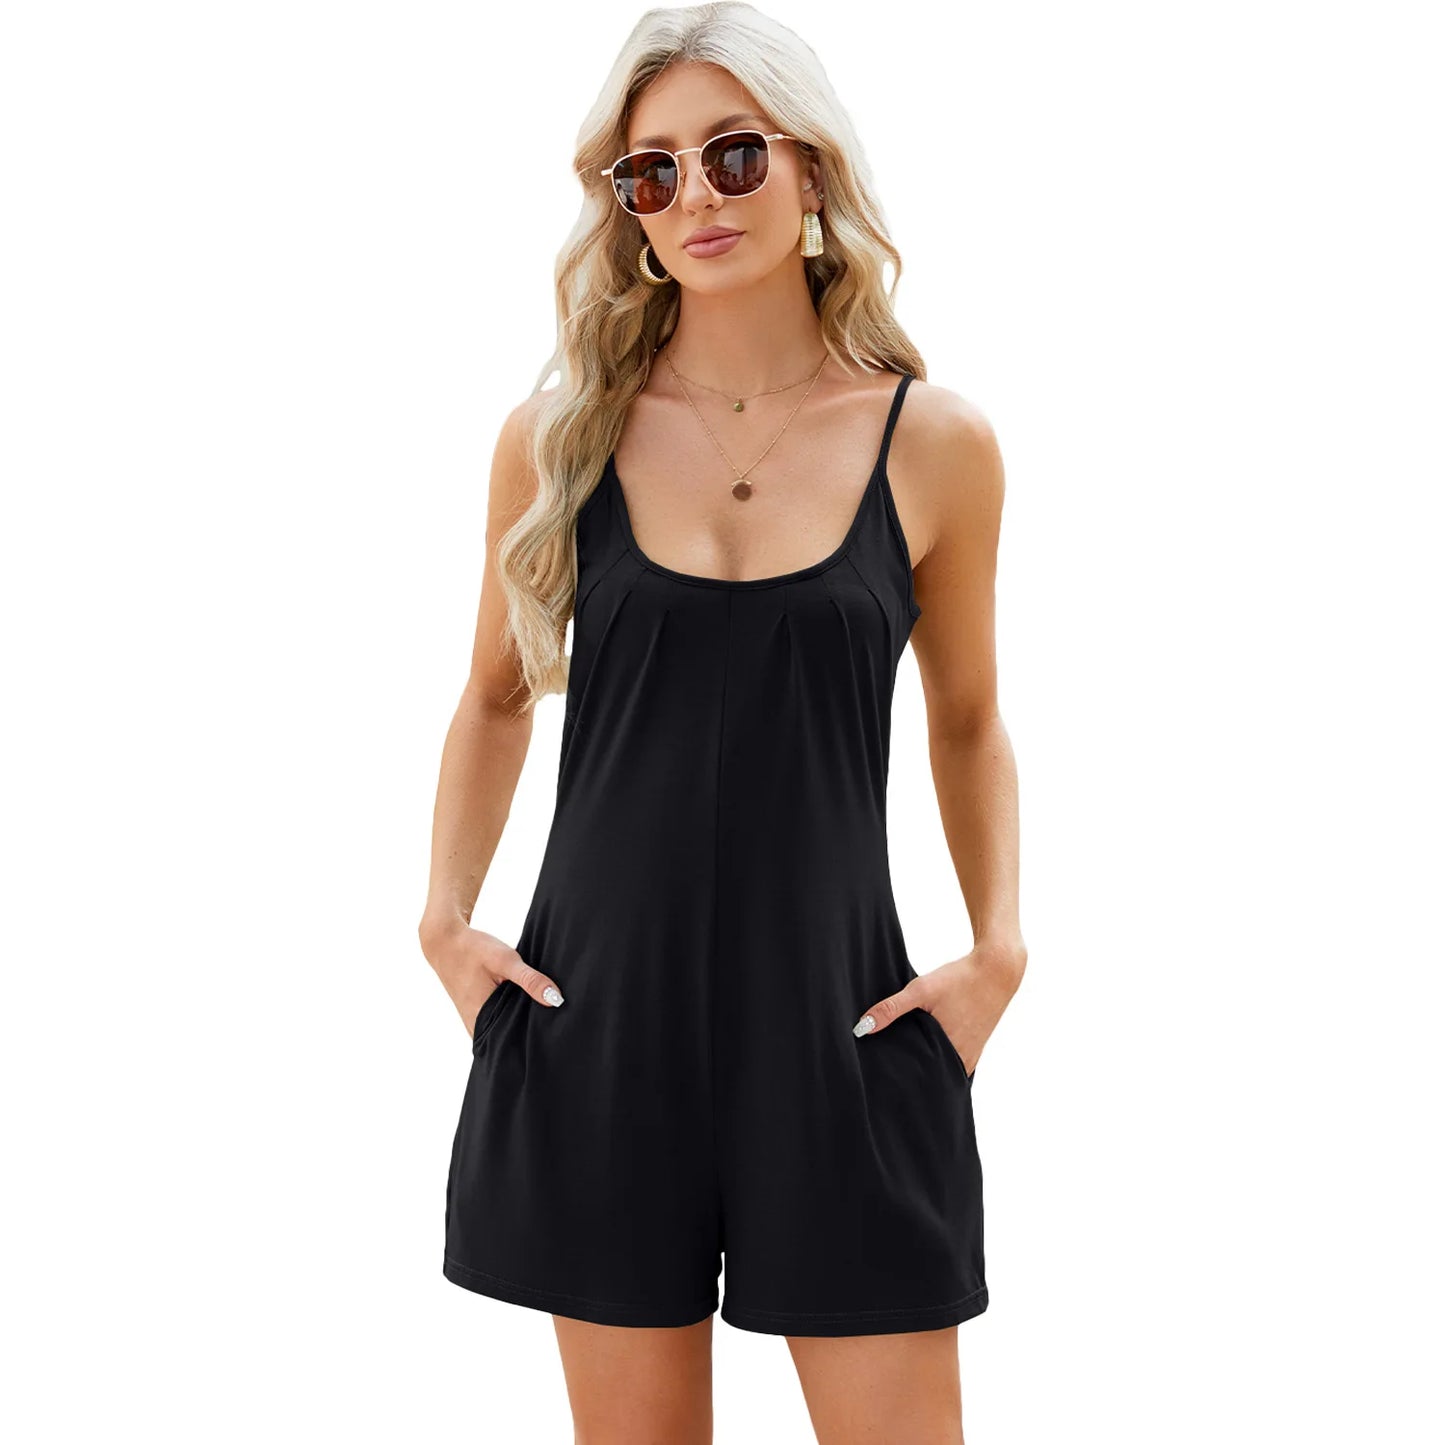 Rompers- Women's Solid Cotton Blend Romper - Short-Length Cami Playsuit- Black- Chuzko Women Clothing